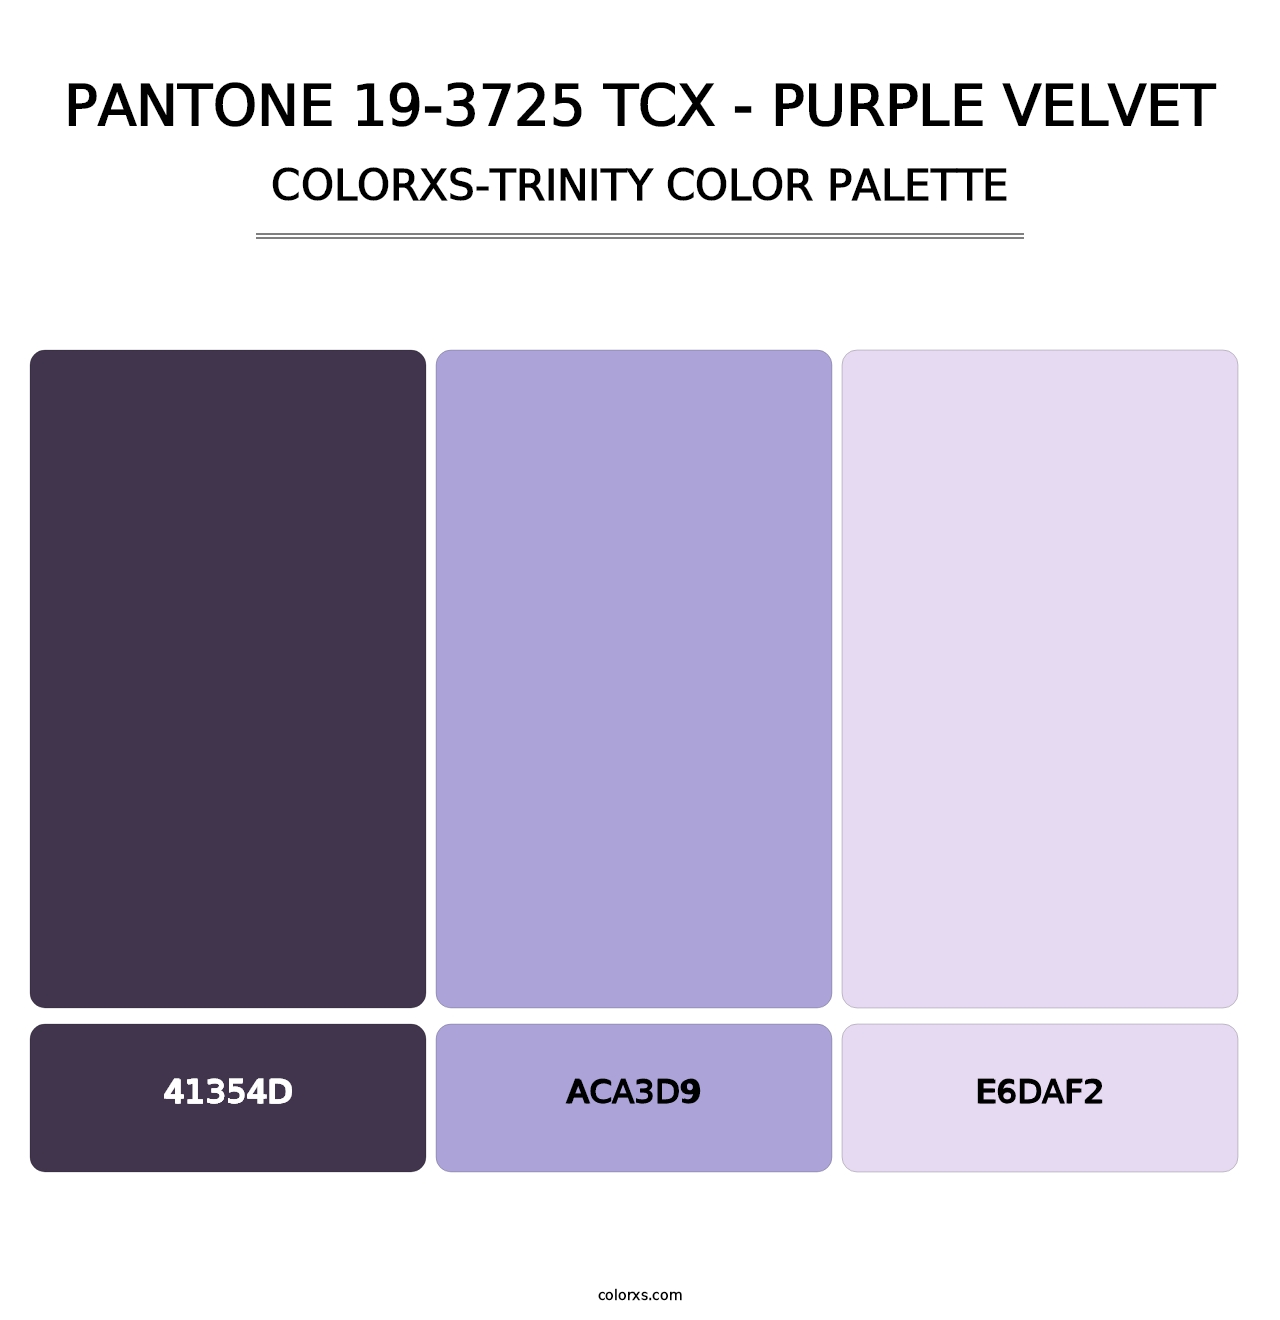 PANTONE 19-3725 TCX - Purple Velvet - Colorxs Trinity Palette